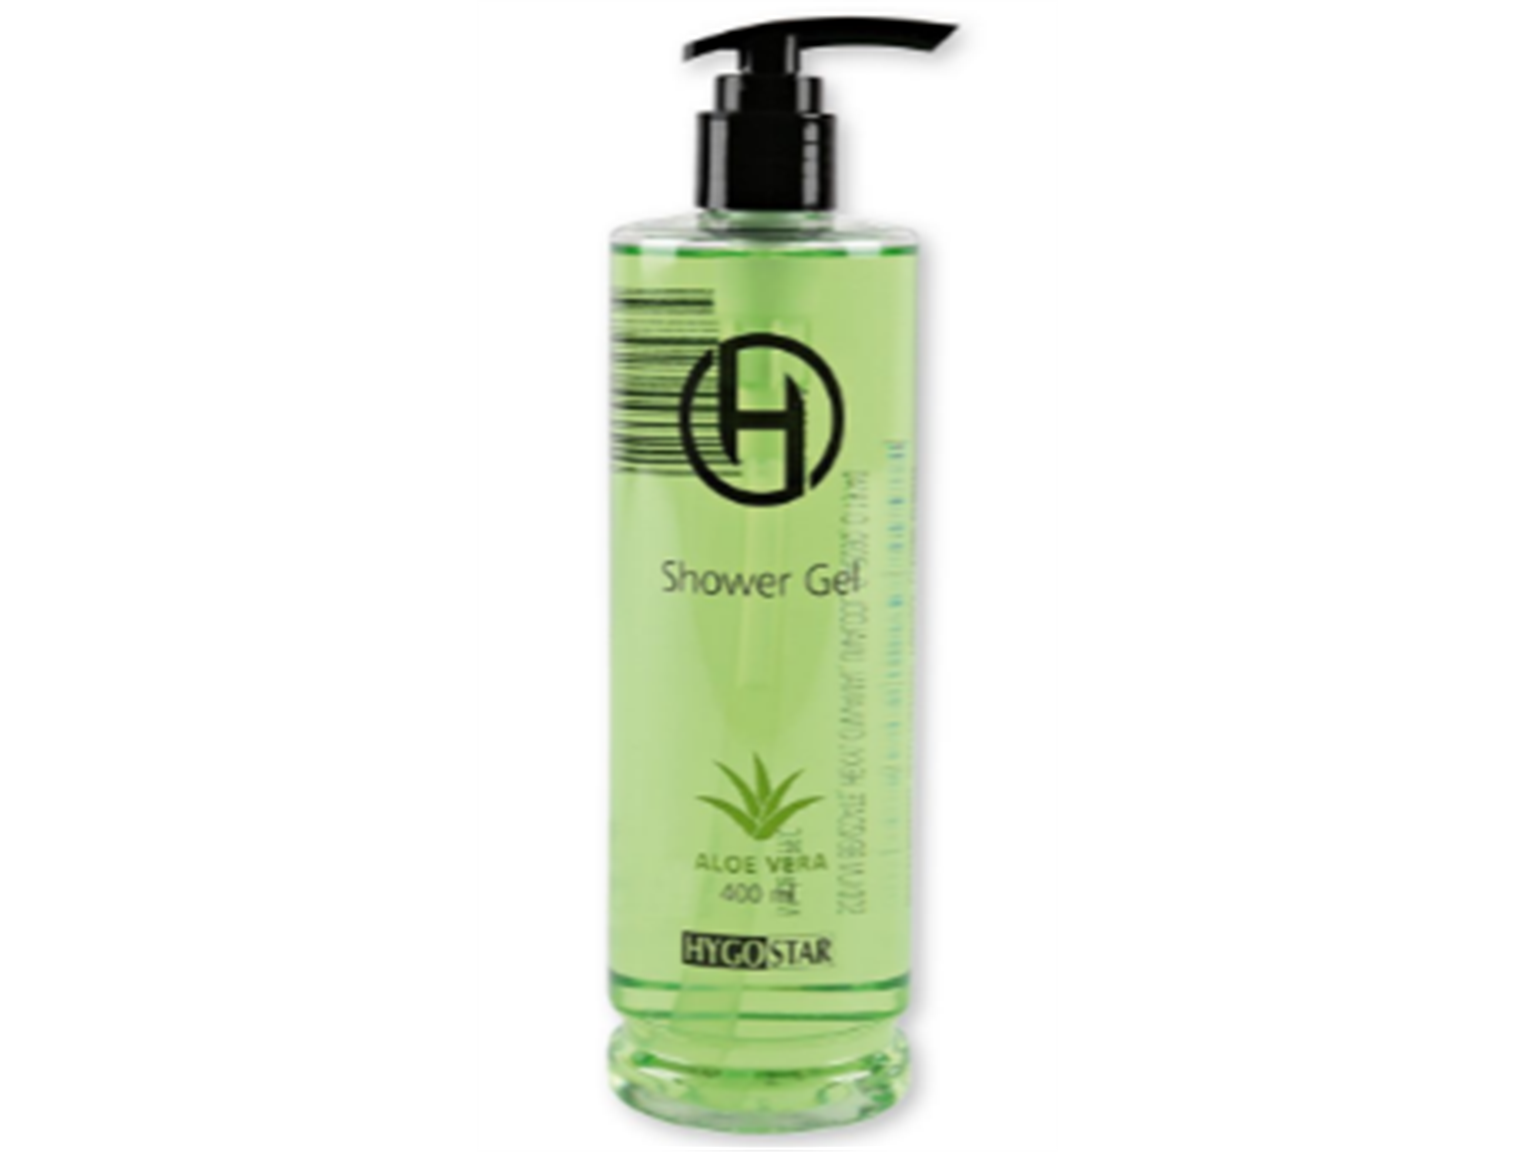 SHOWER GEL HYGOSTAR  Shower Gel, Pumpspender, 400 ml